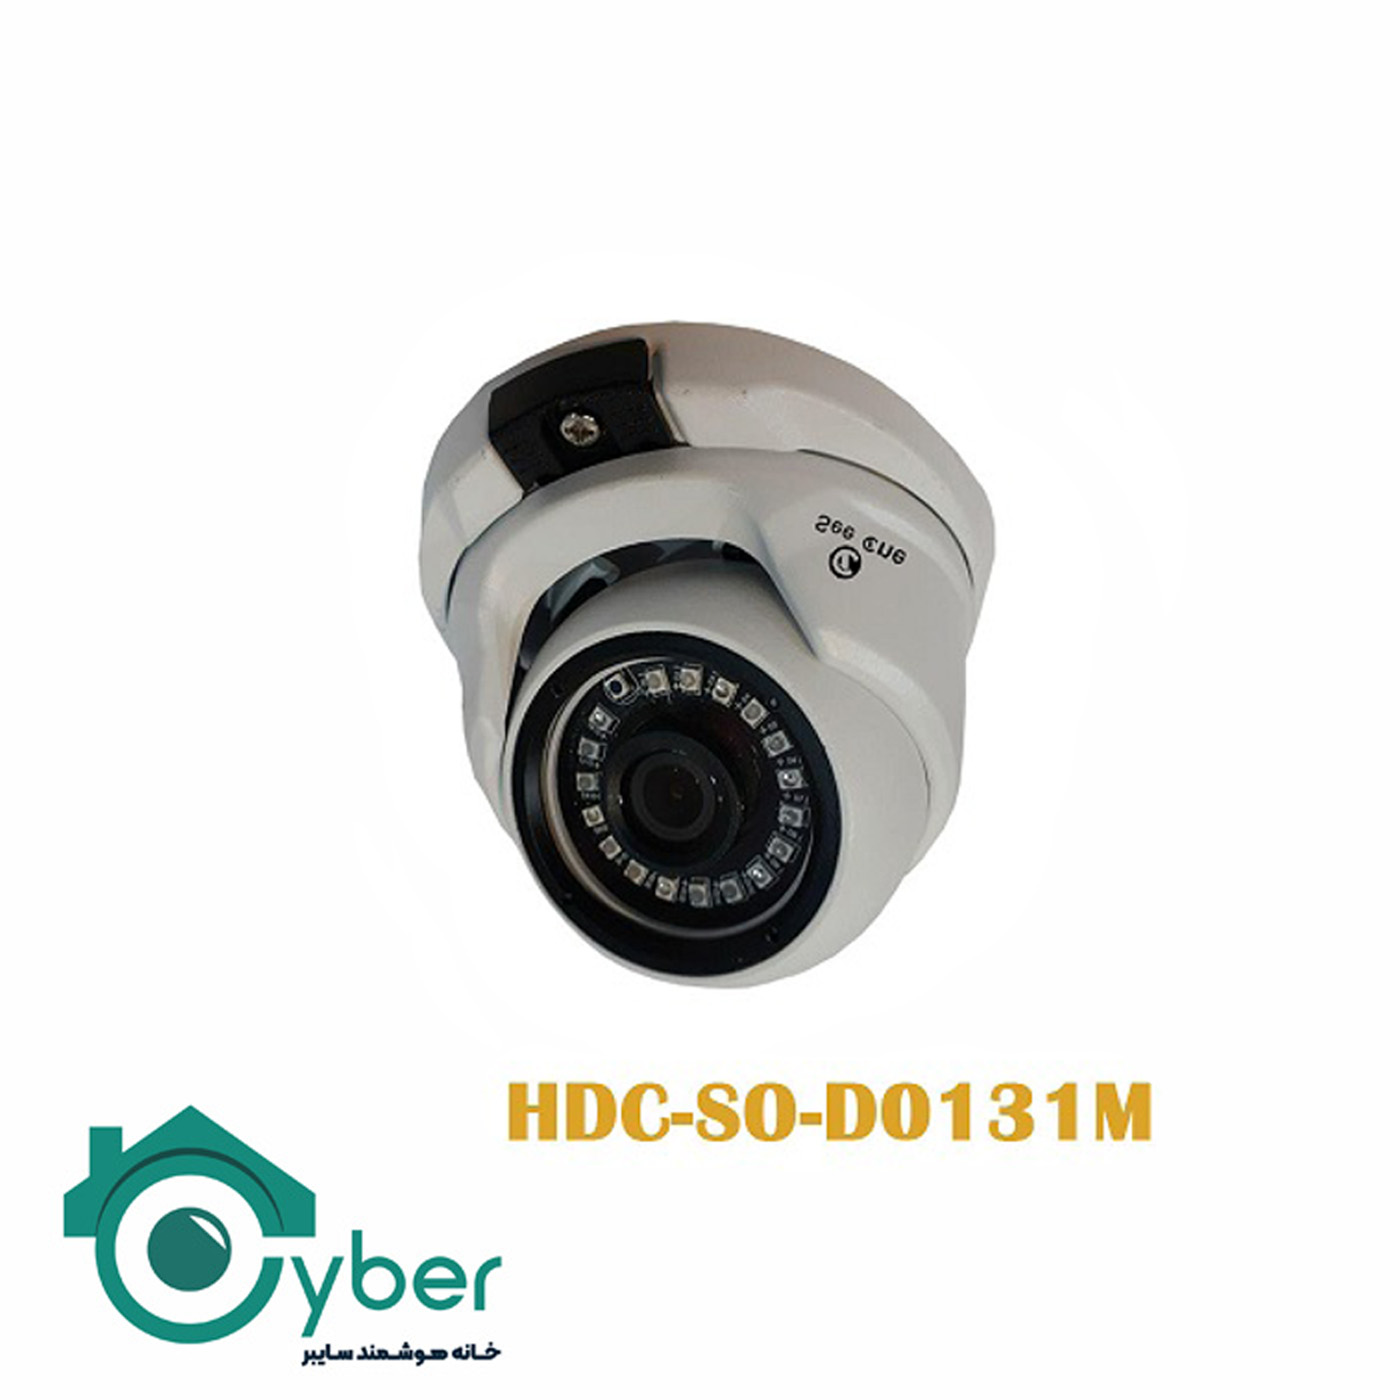 دوربین 2MP Seeone مدل HDC-S0-D0131M - سیوان